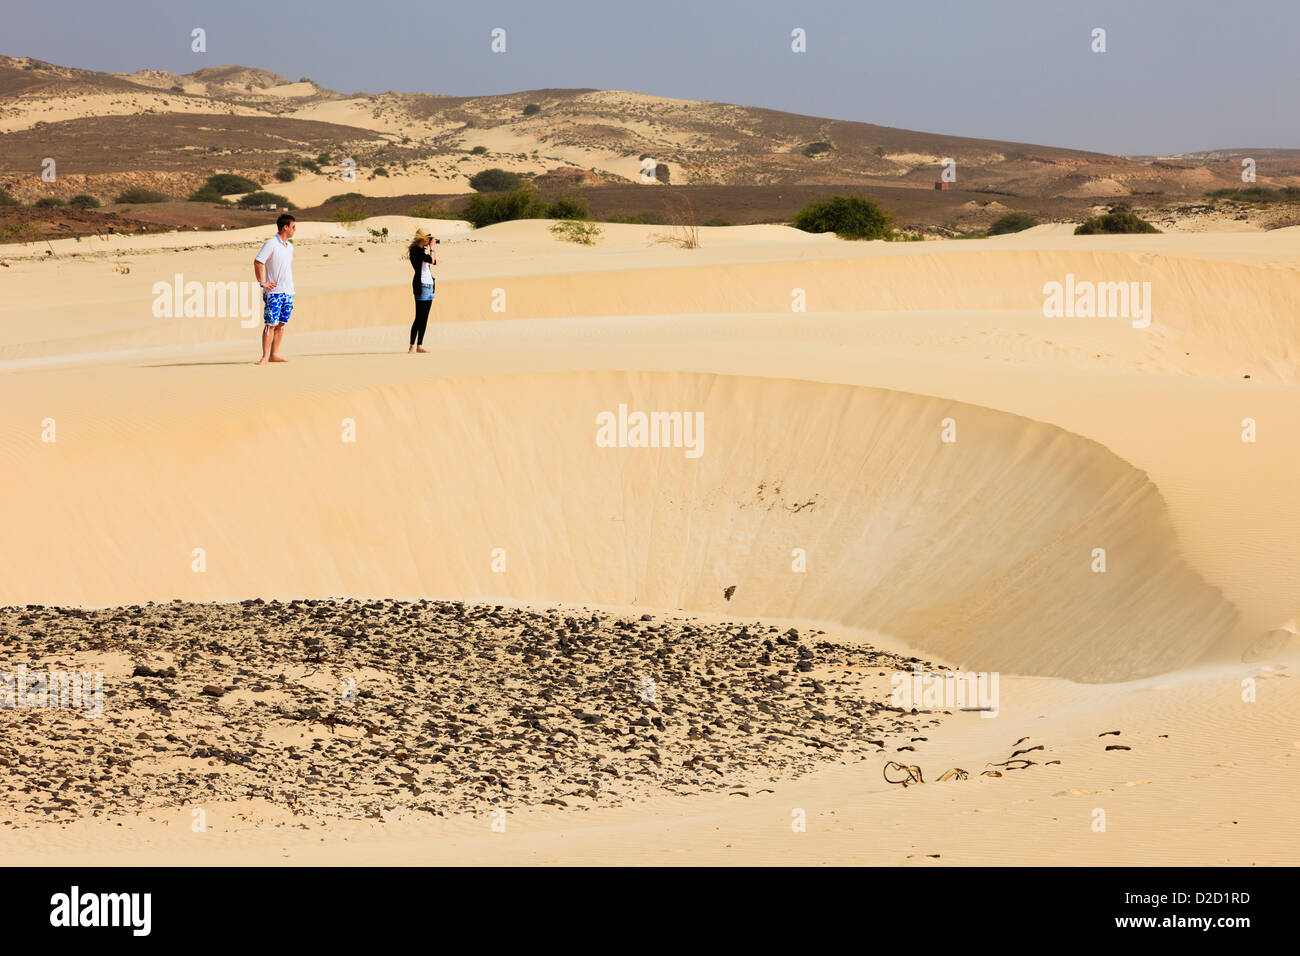 Two tourists photographing the desert sand at Deserto de Viana, Boa Vista, Cape Verde Islands, Africa. Stock Photo